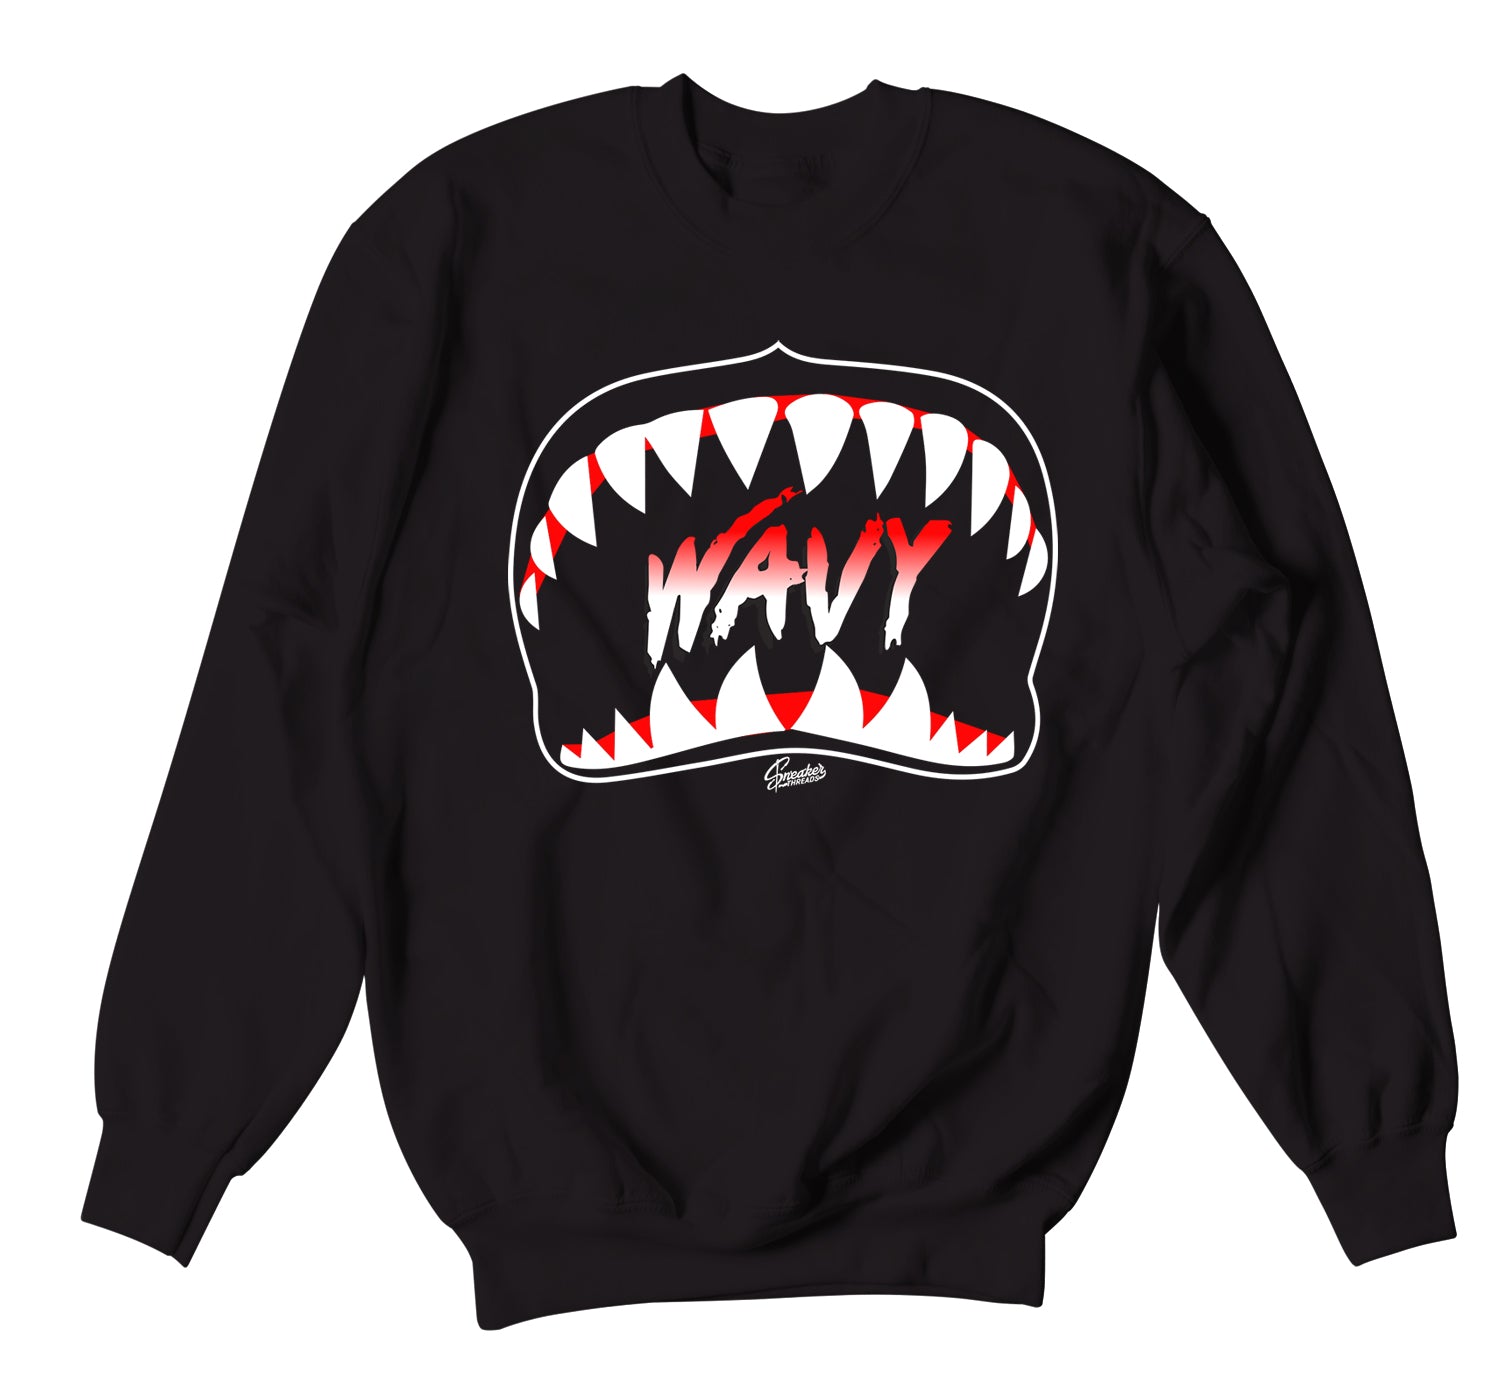 Bred 350 Sweater - Wavy - Black